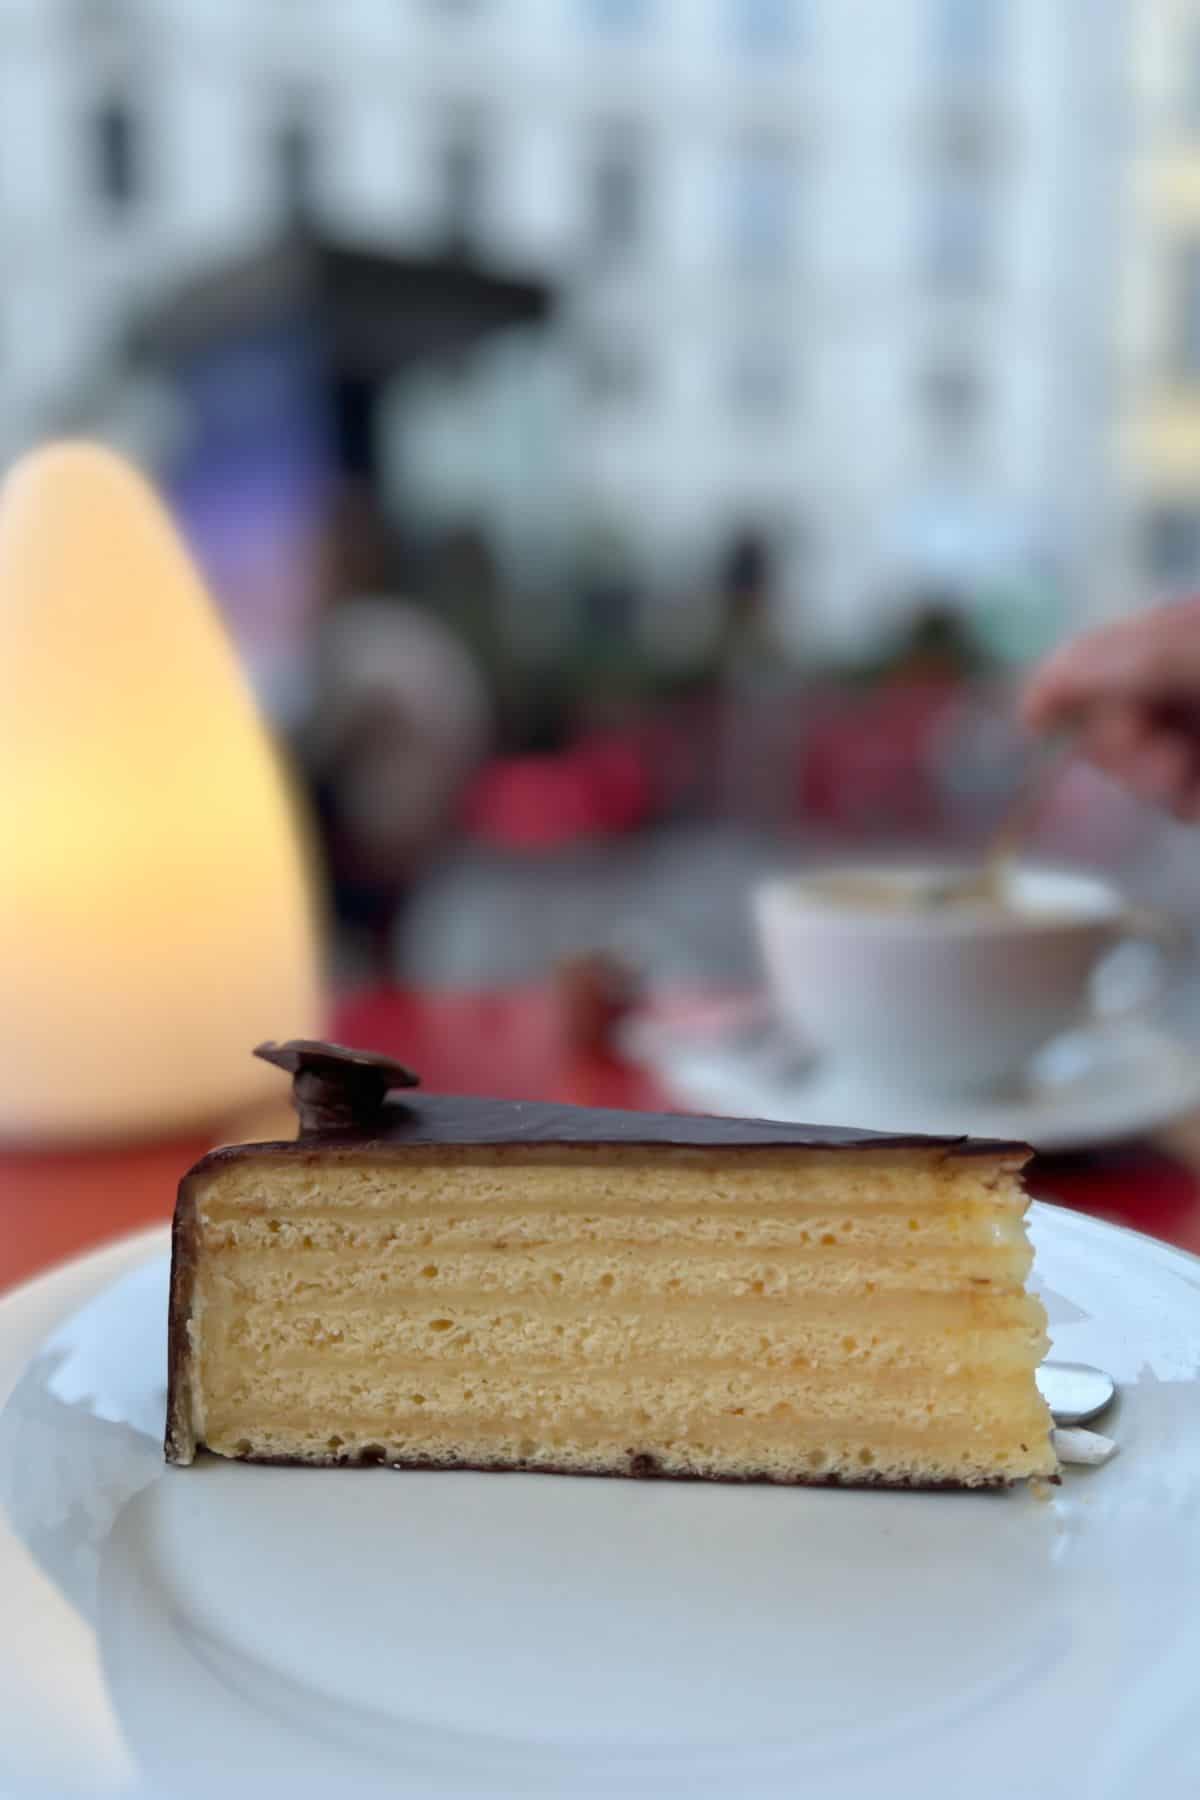 Classic German Gentlemen's Cake ( Herrentorte) from Cafe Luitpold in Munich